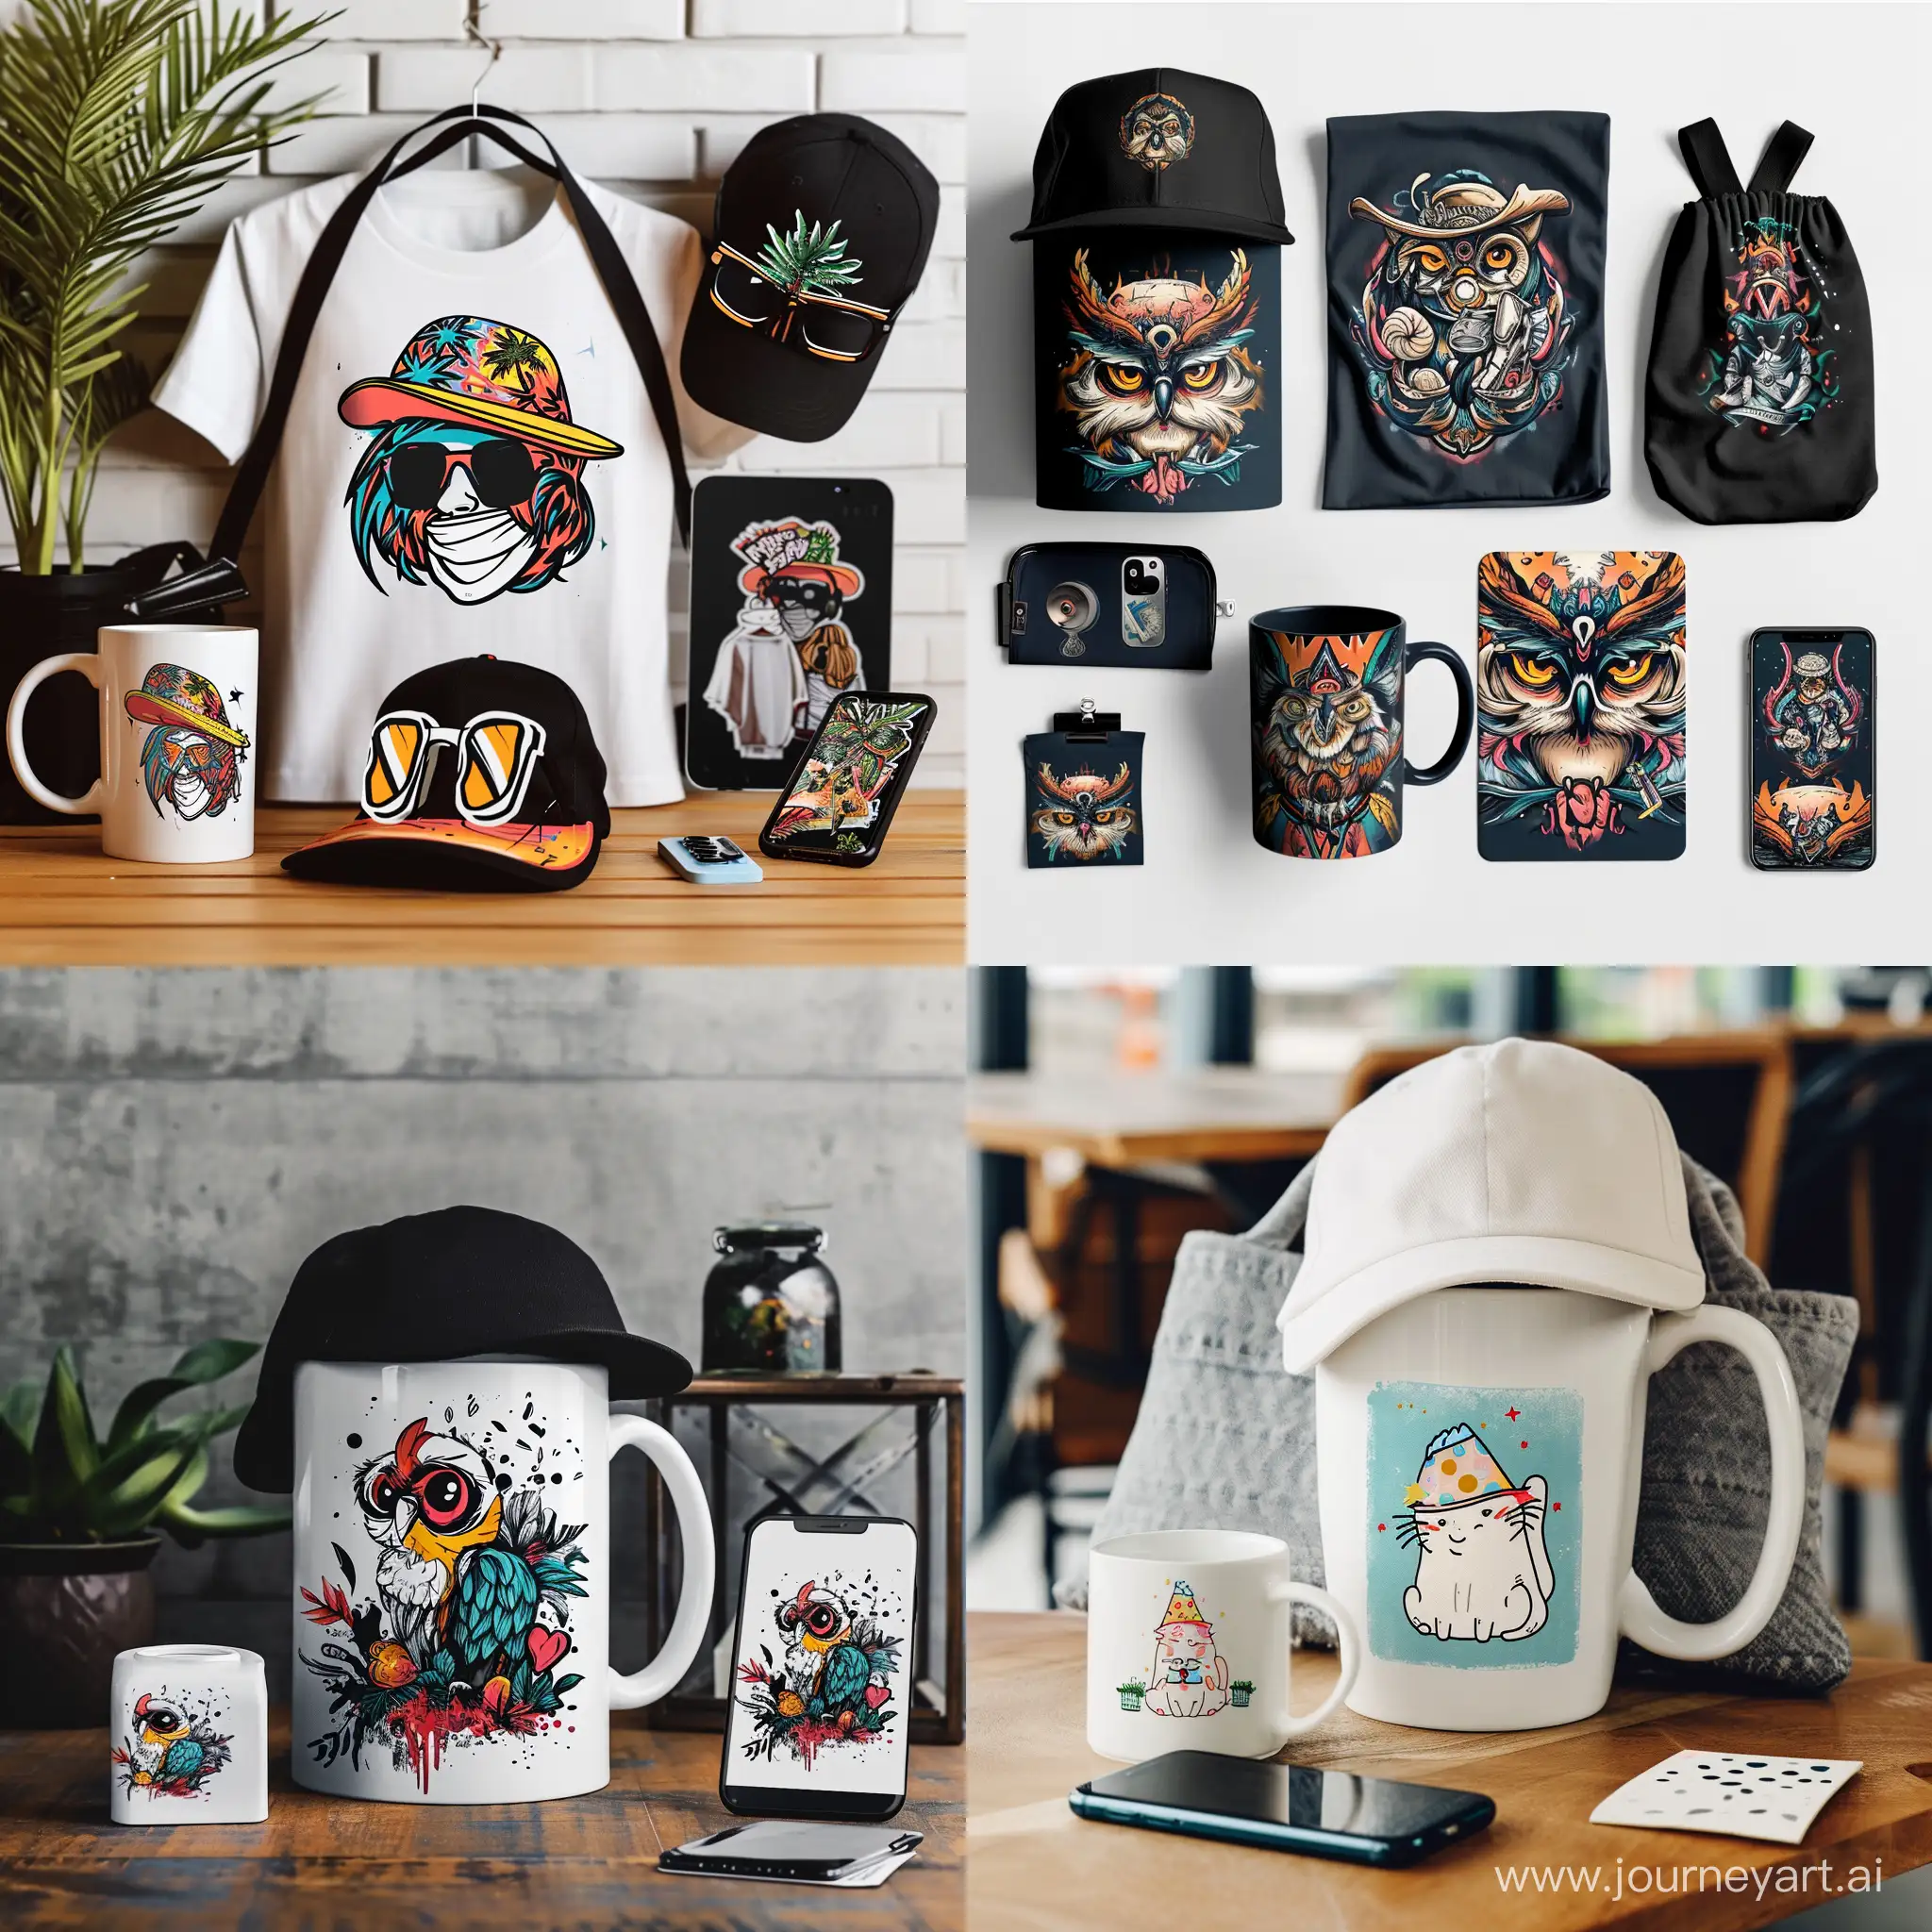 design professional mug, hat, t-shirt, sticker, phone cases, totes bags